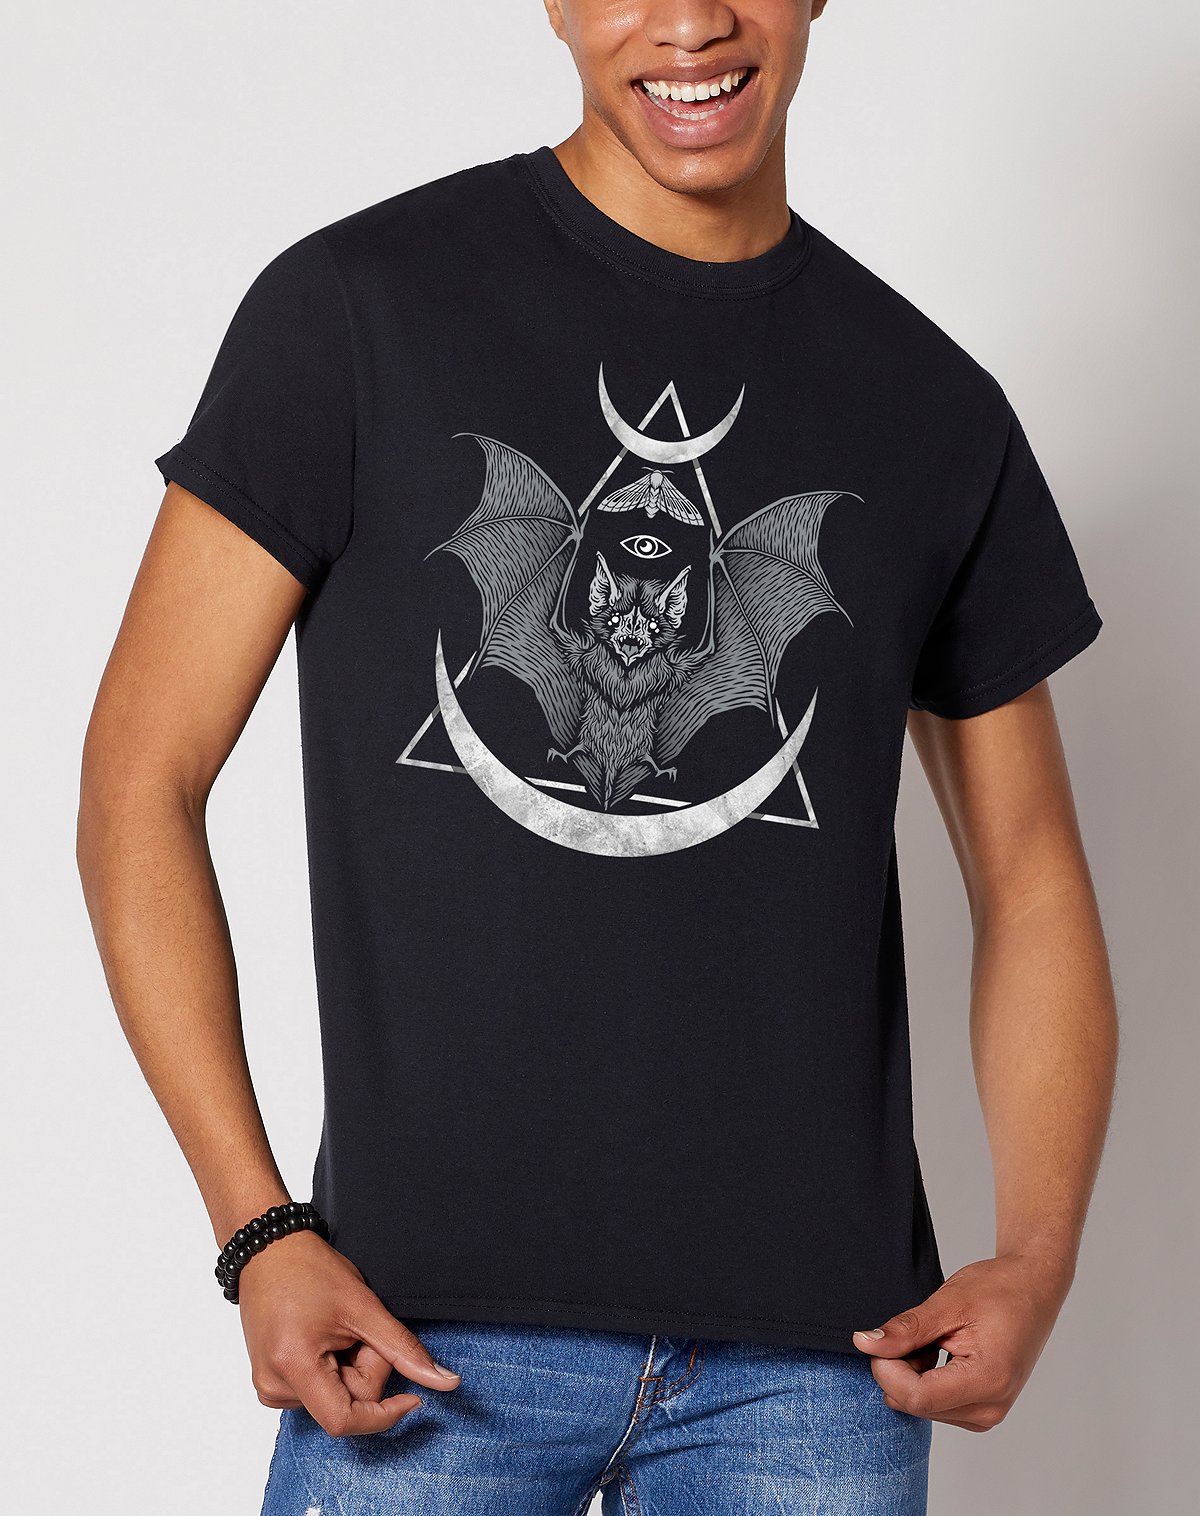 Occult Bat T Shirt